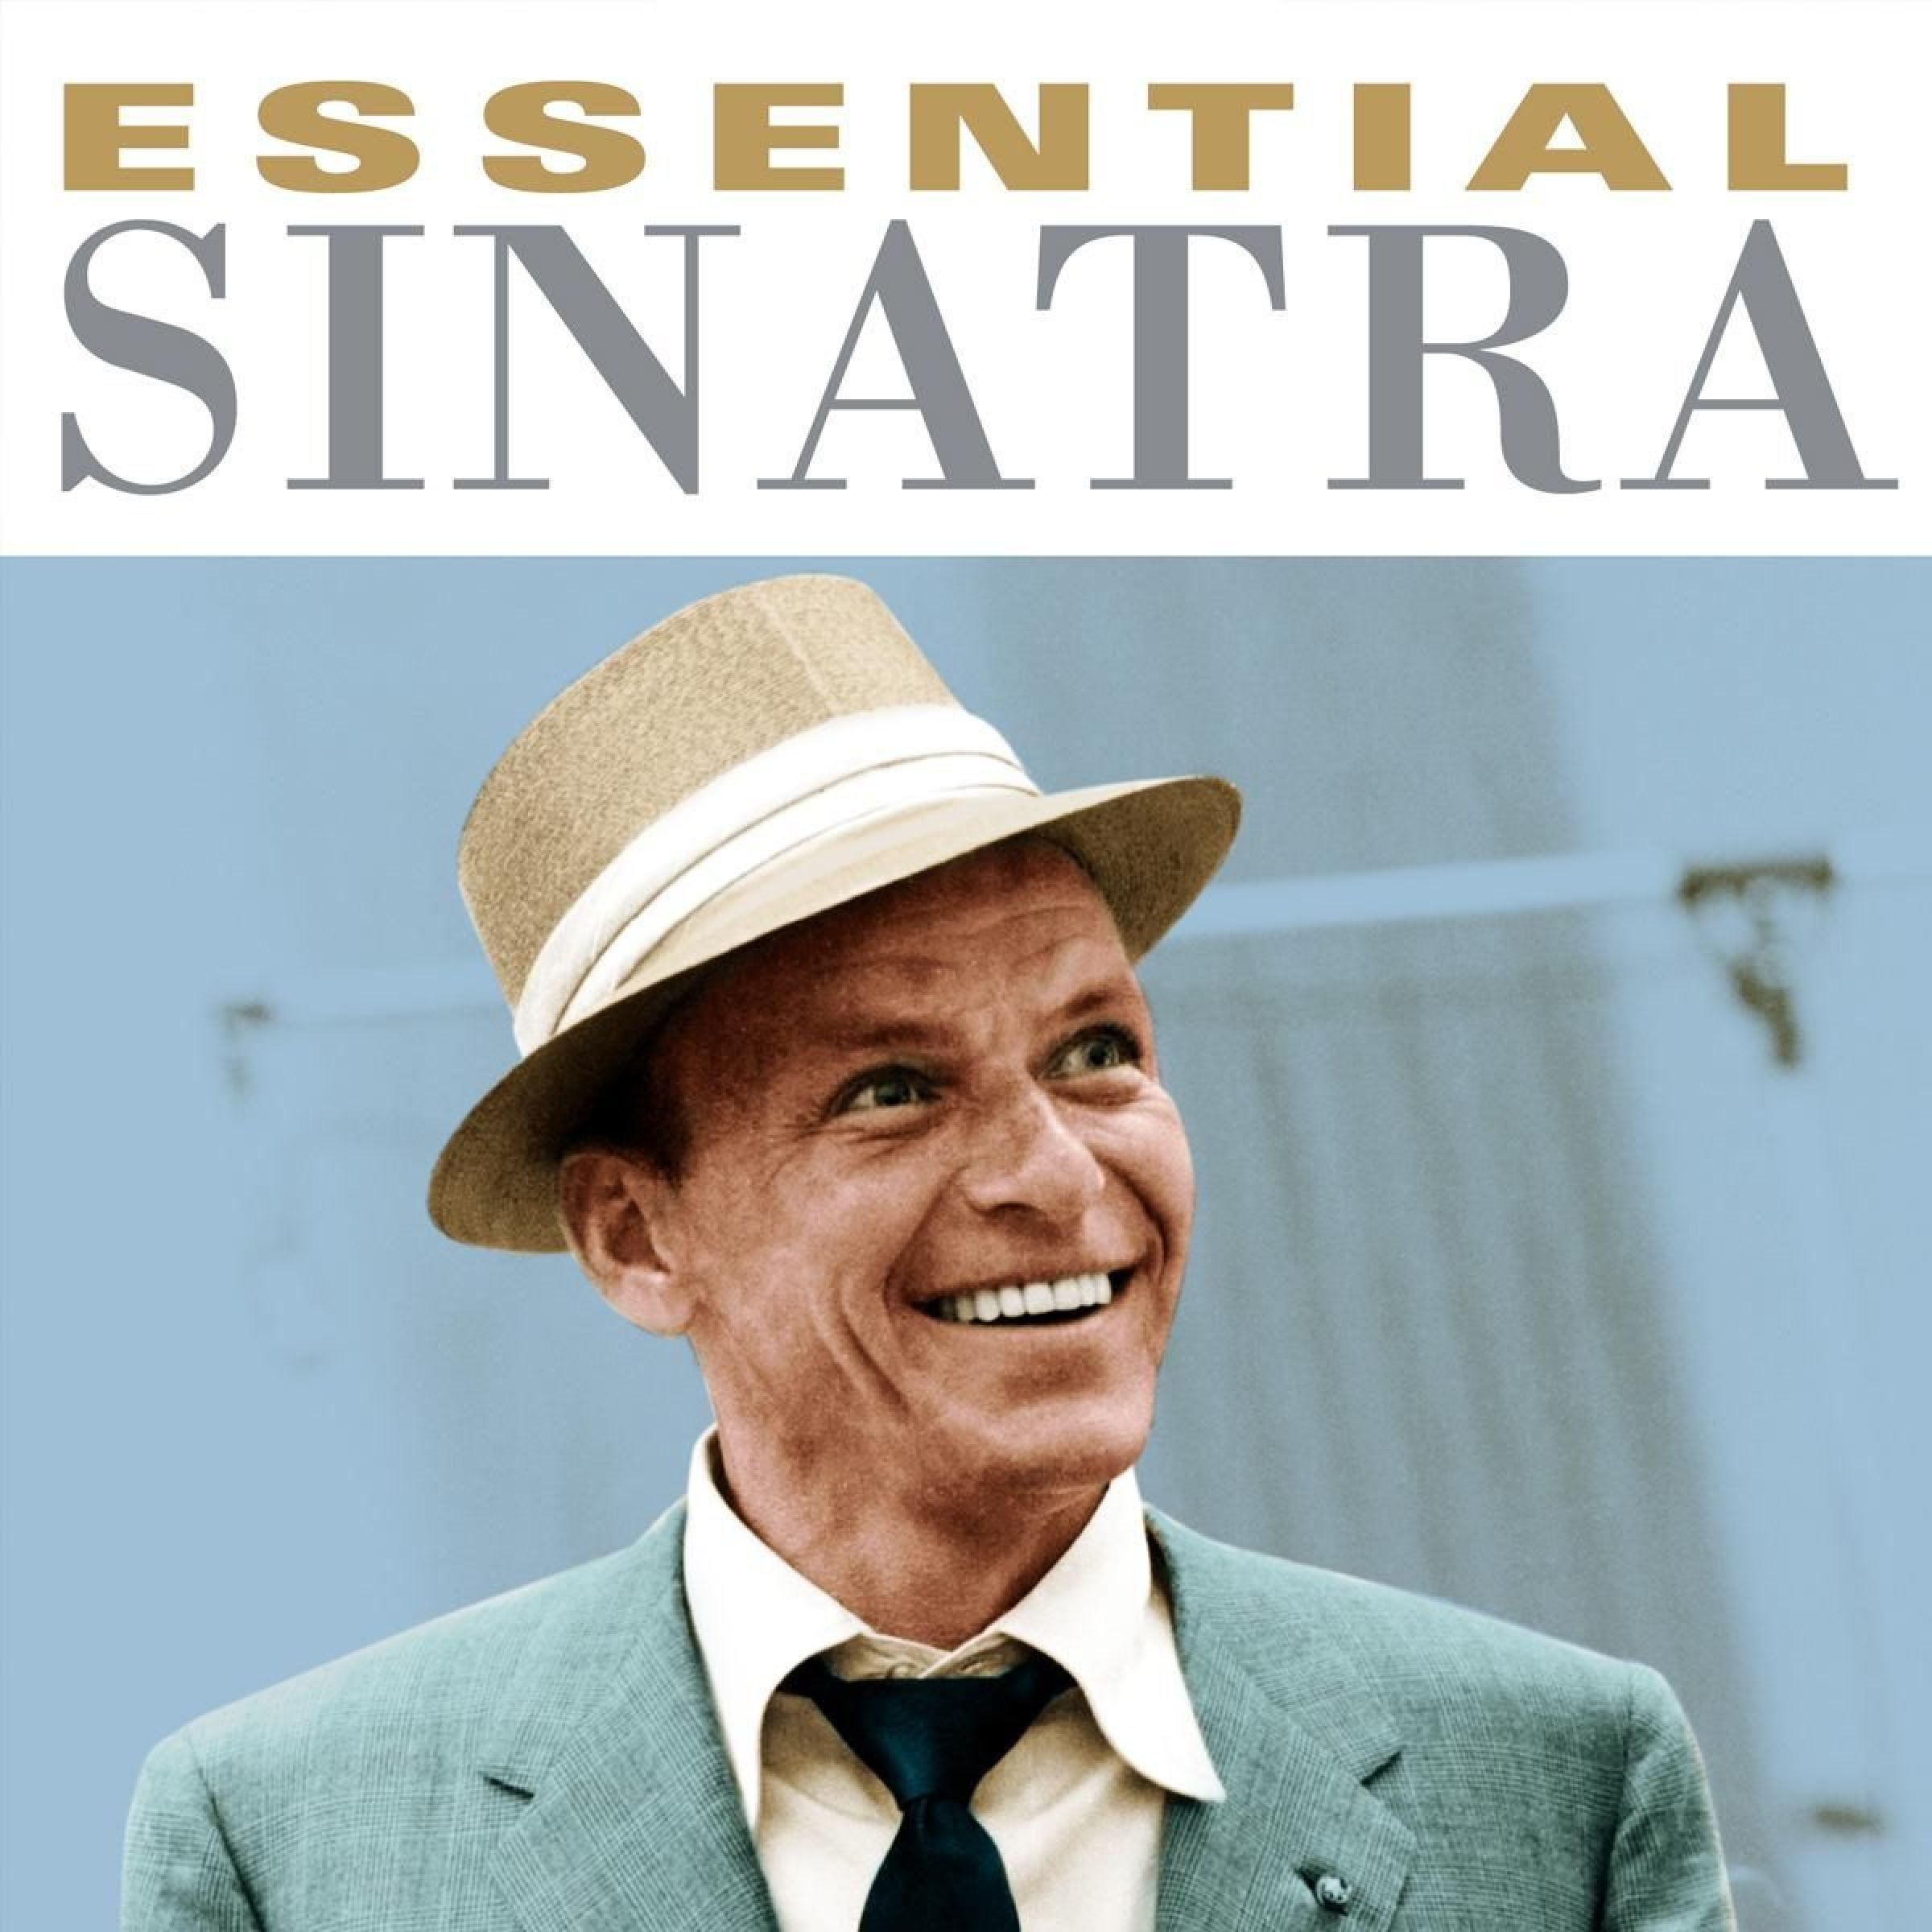 Frank Sinatra - I Wont Dance